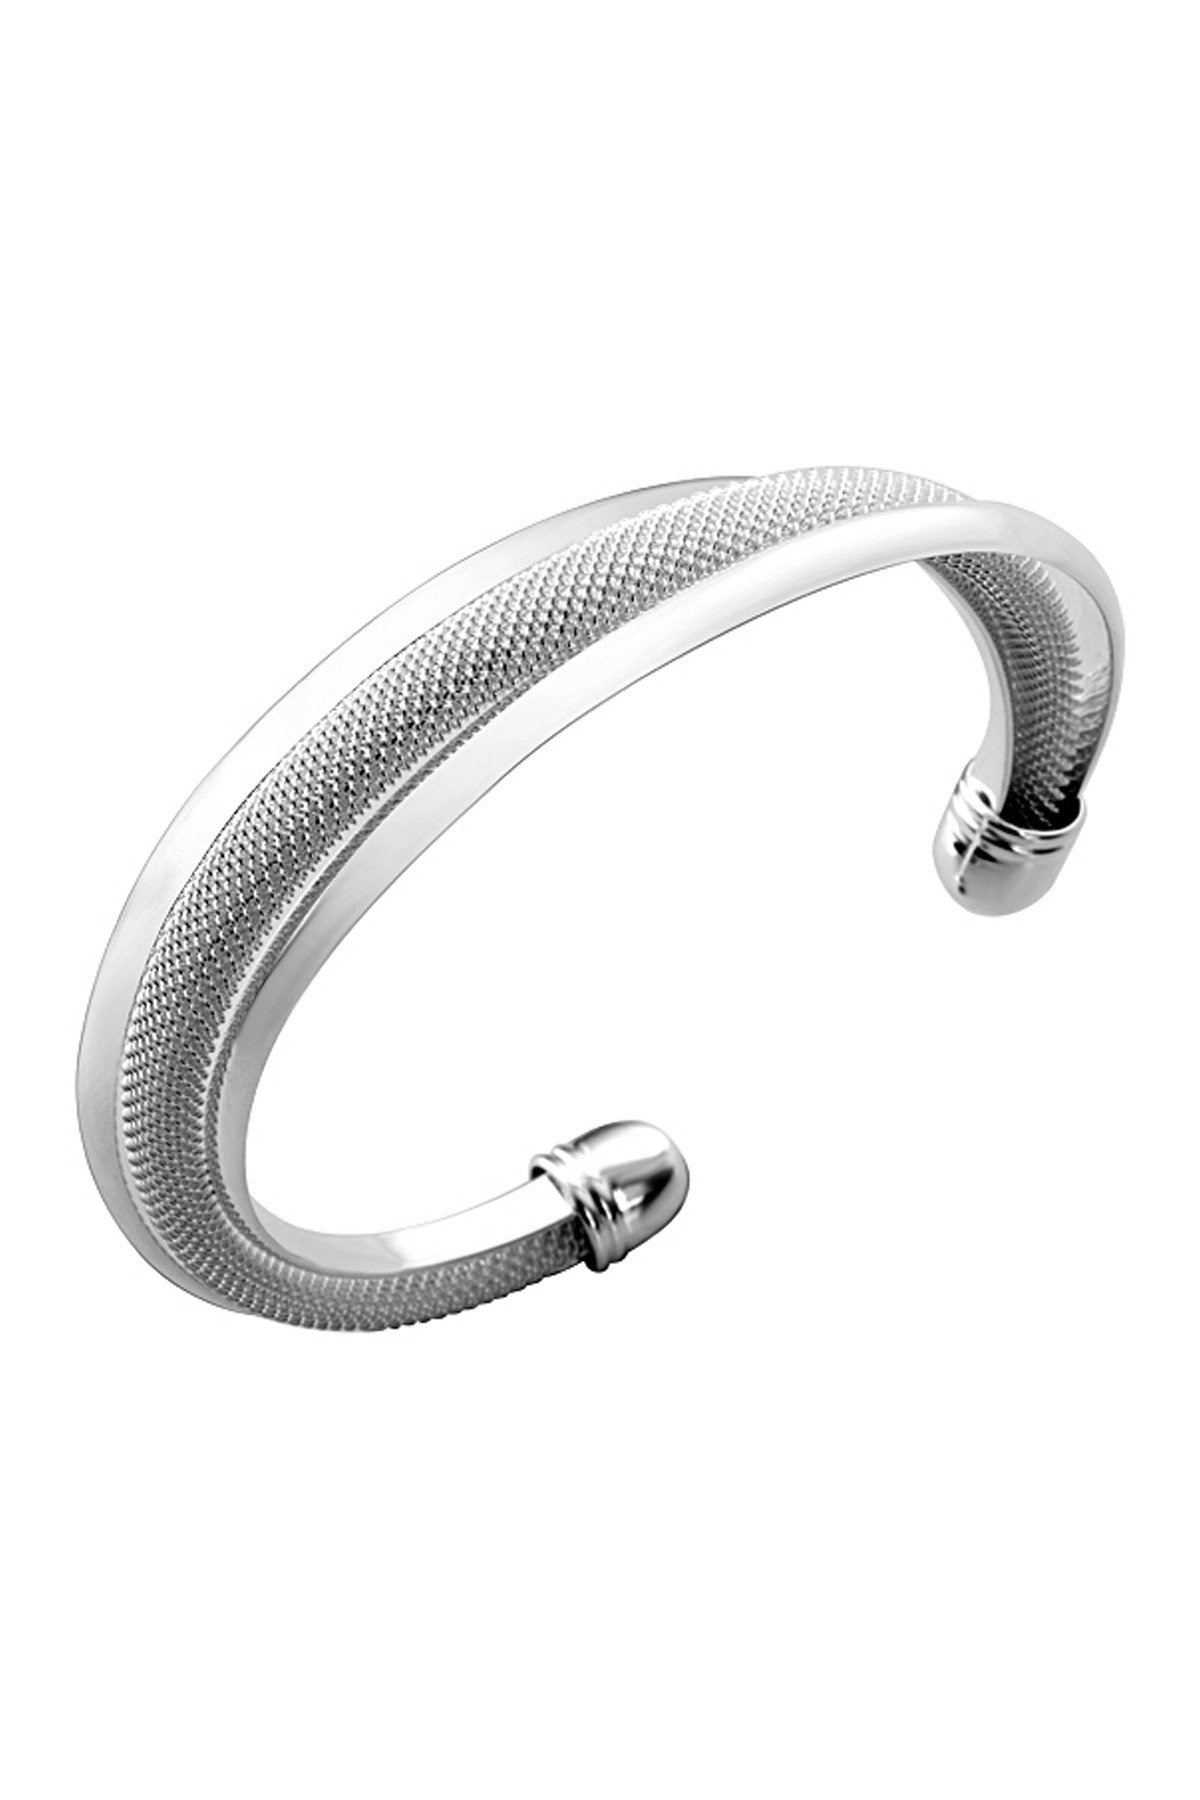 Silver Bangle Bracelets For Women -mandy Bracelet For Women-bracelets For Women